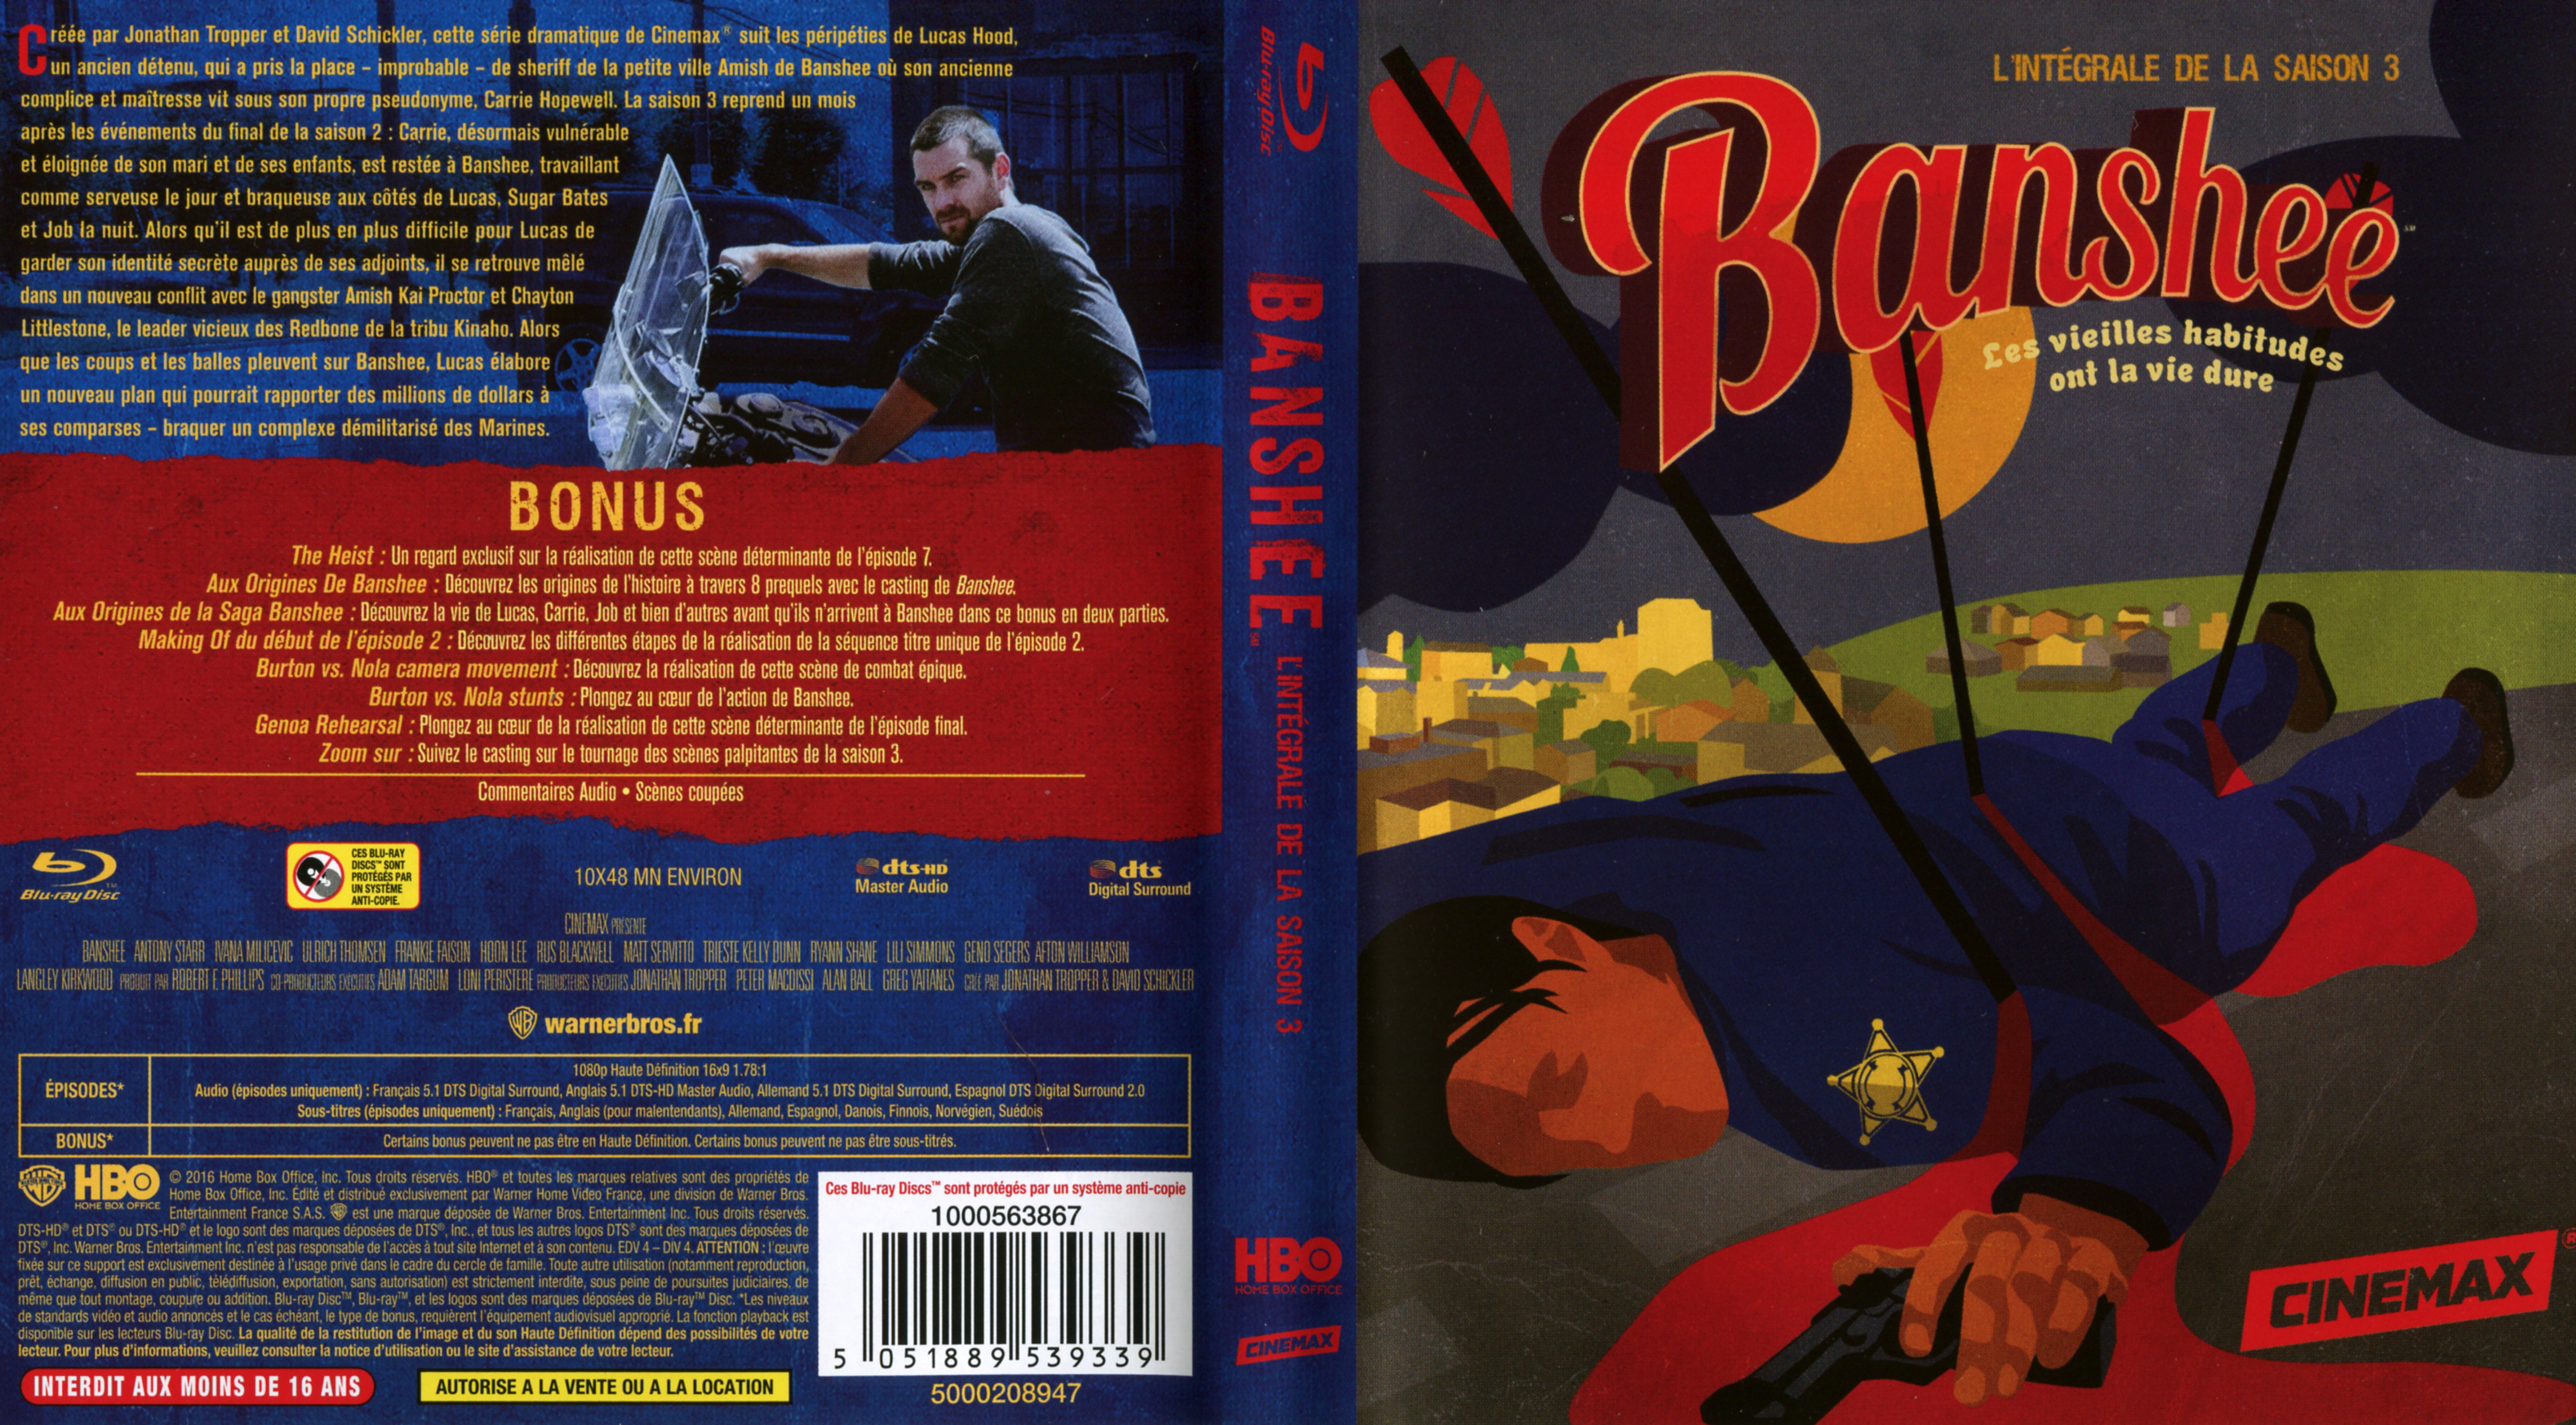 Jaquette DVD Banshee saison 3 (BLU-RAY)